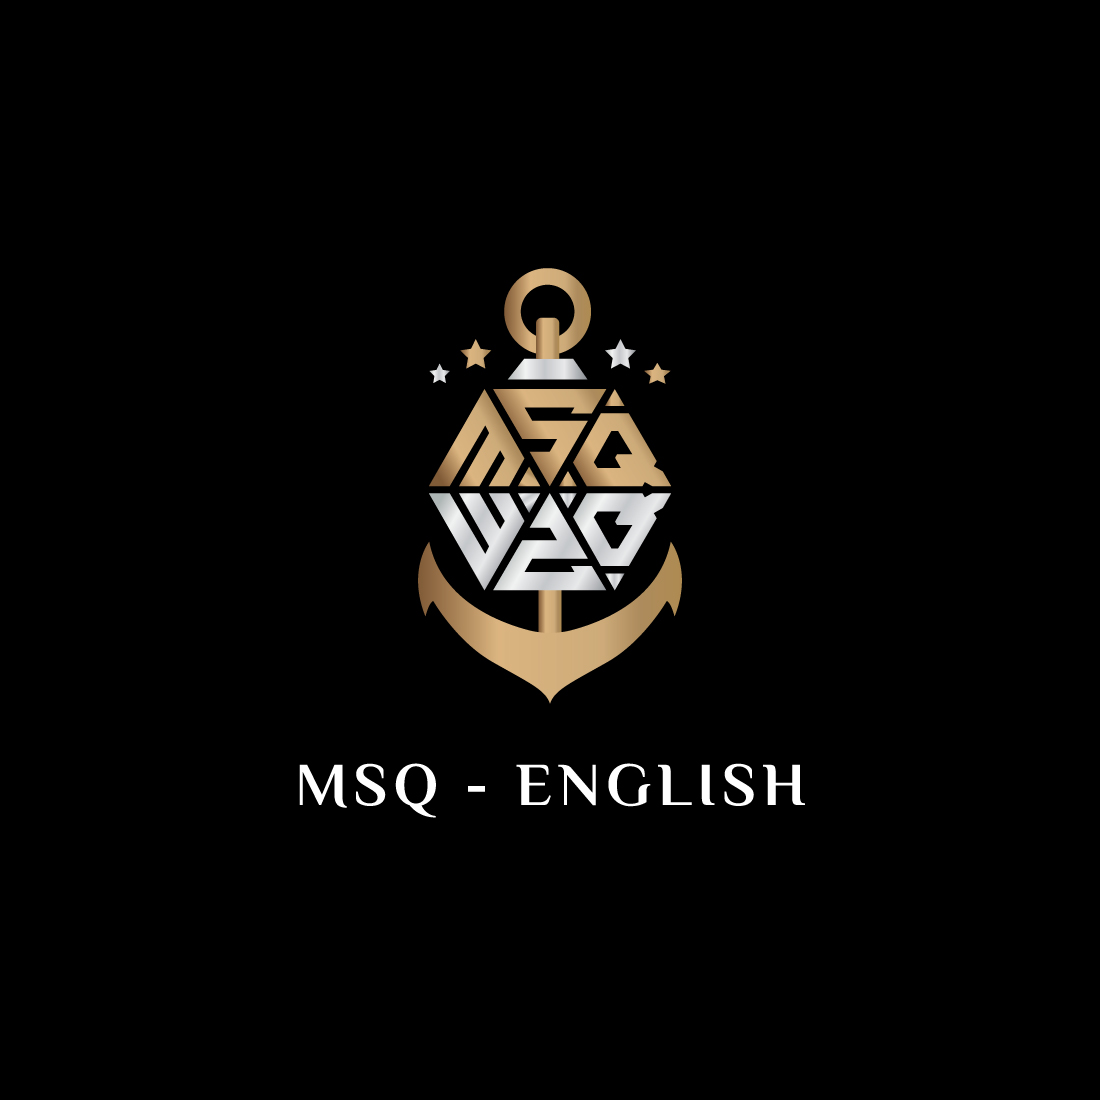 MSQ LOGO cover image.